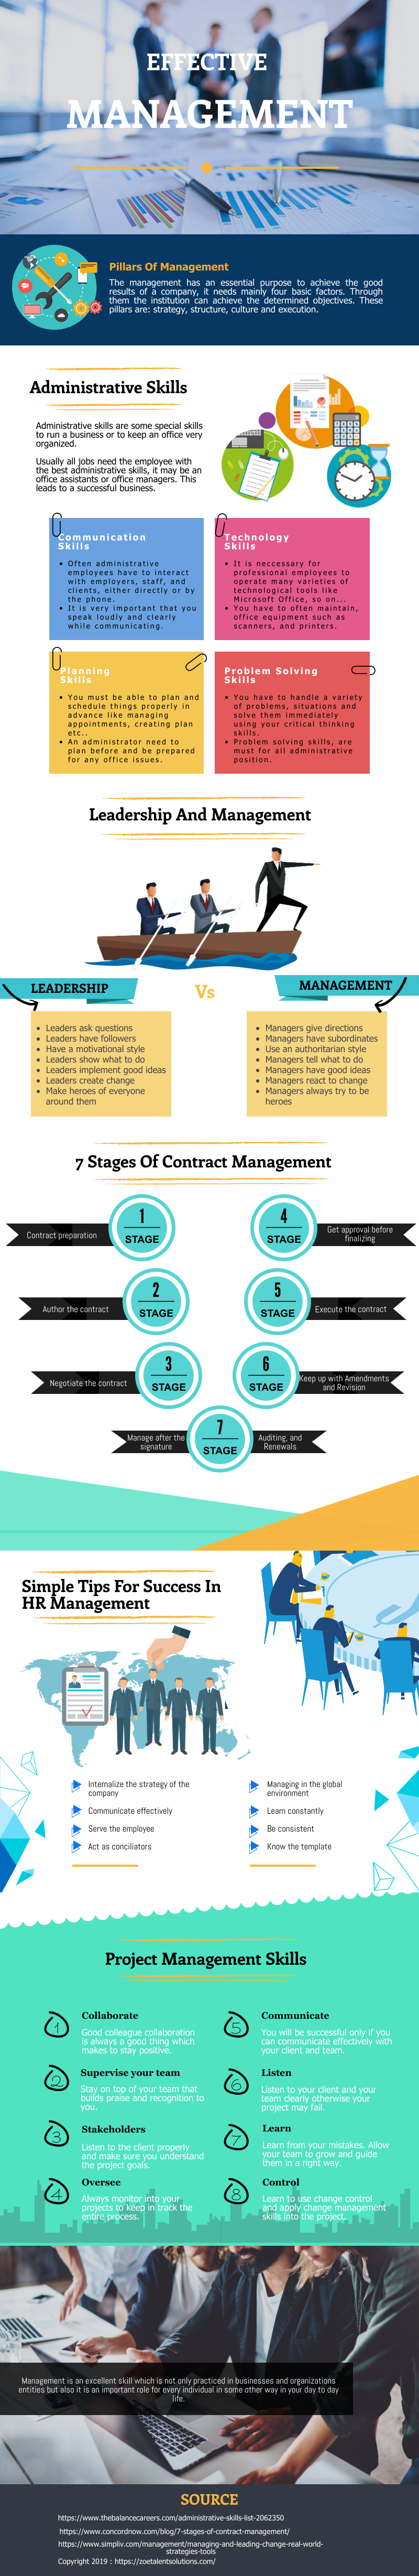 original infographic effective management 1 1 1